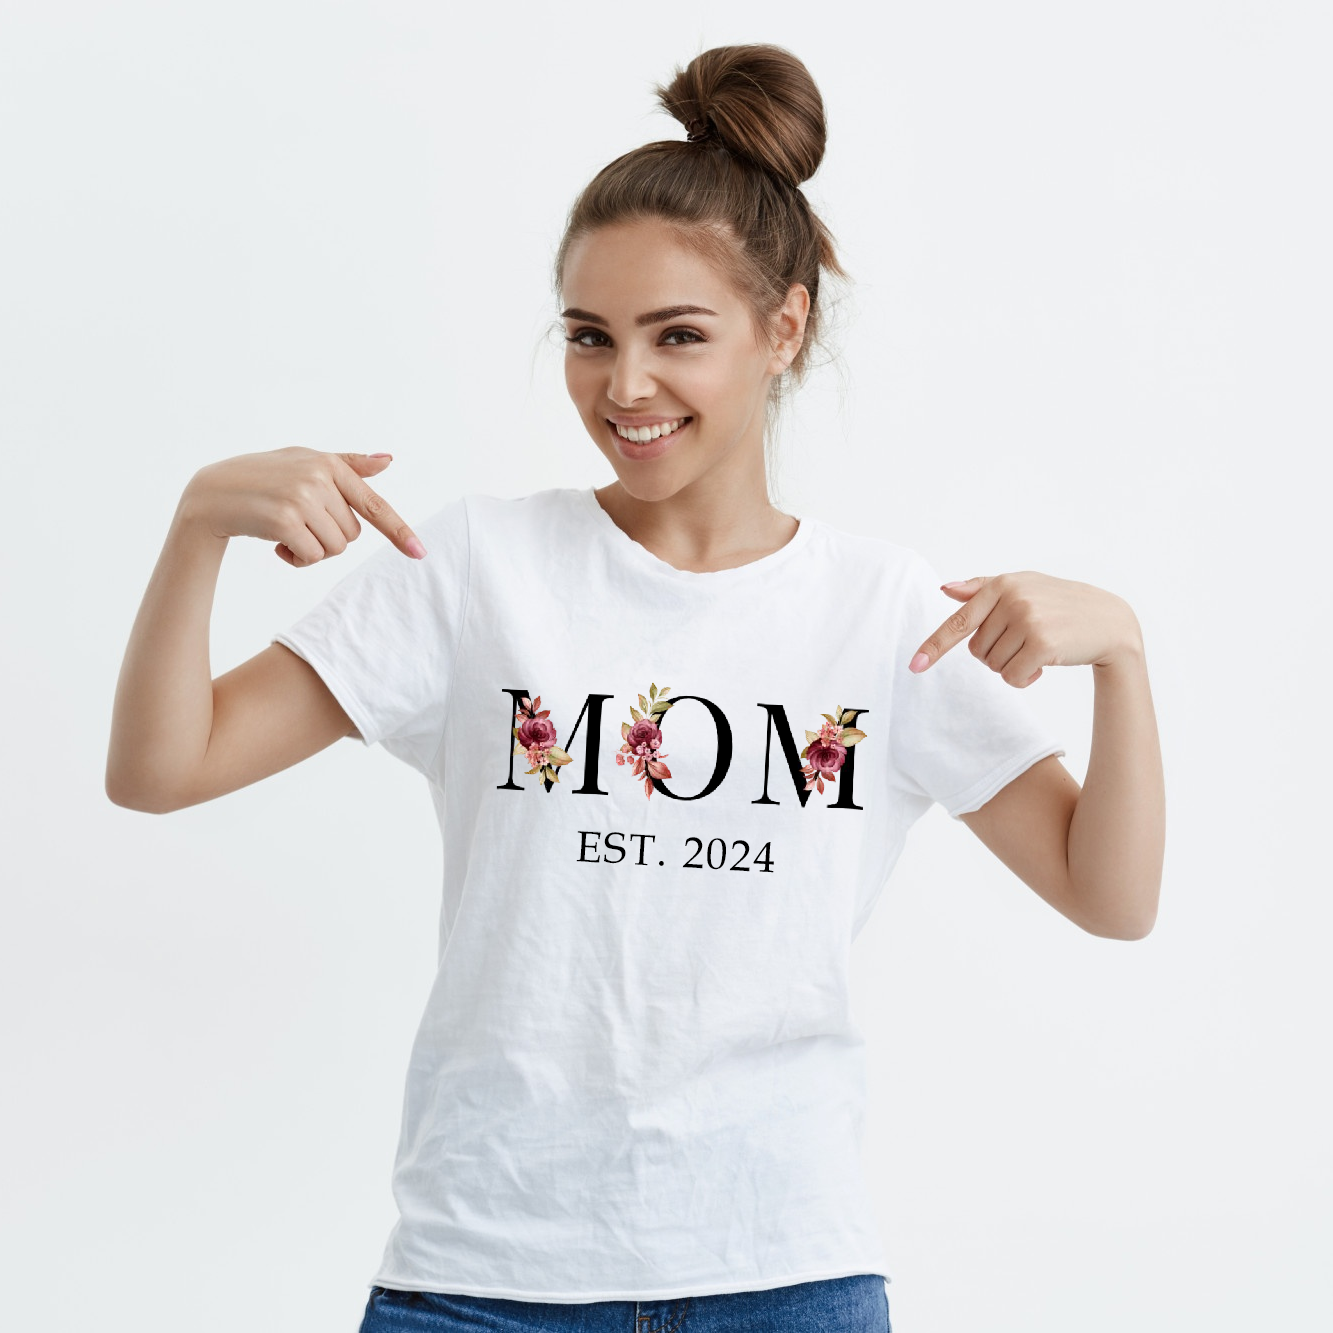 Endanzoo Organic Women Short Sleeve T-shirt for Mom - Classic